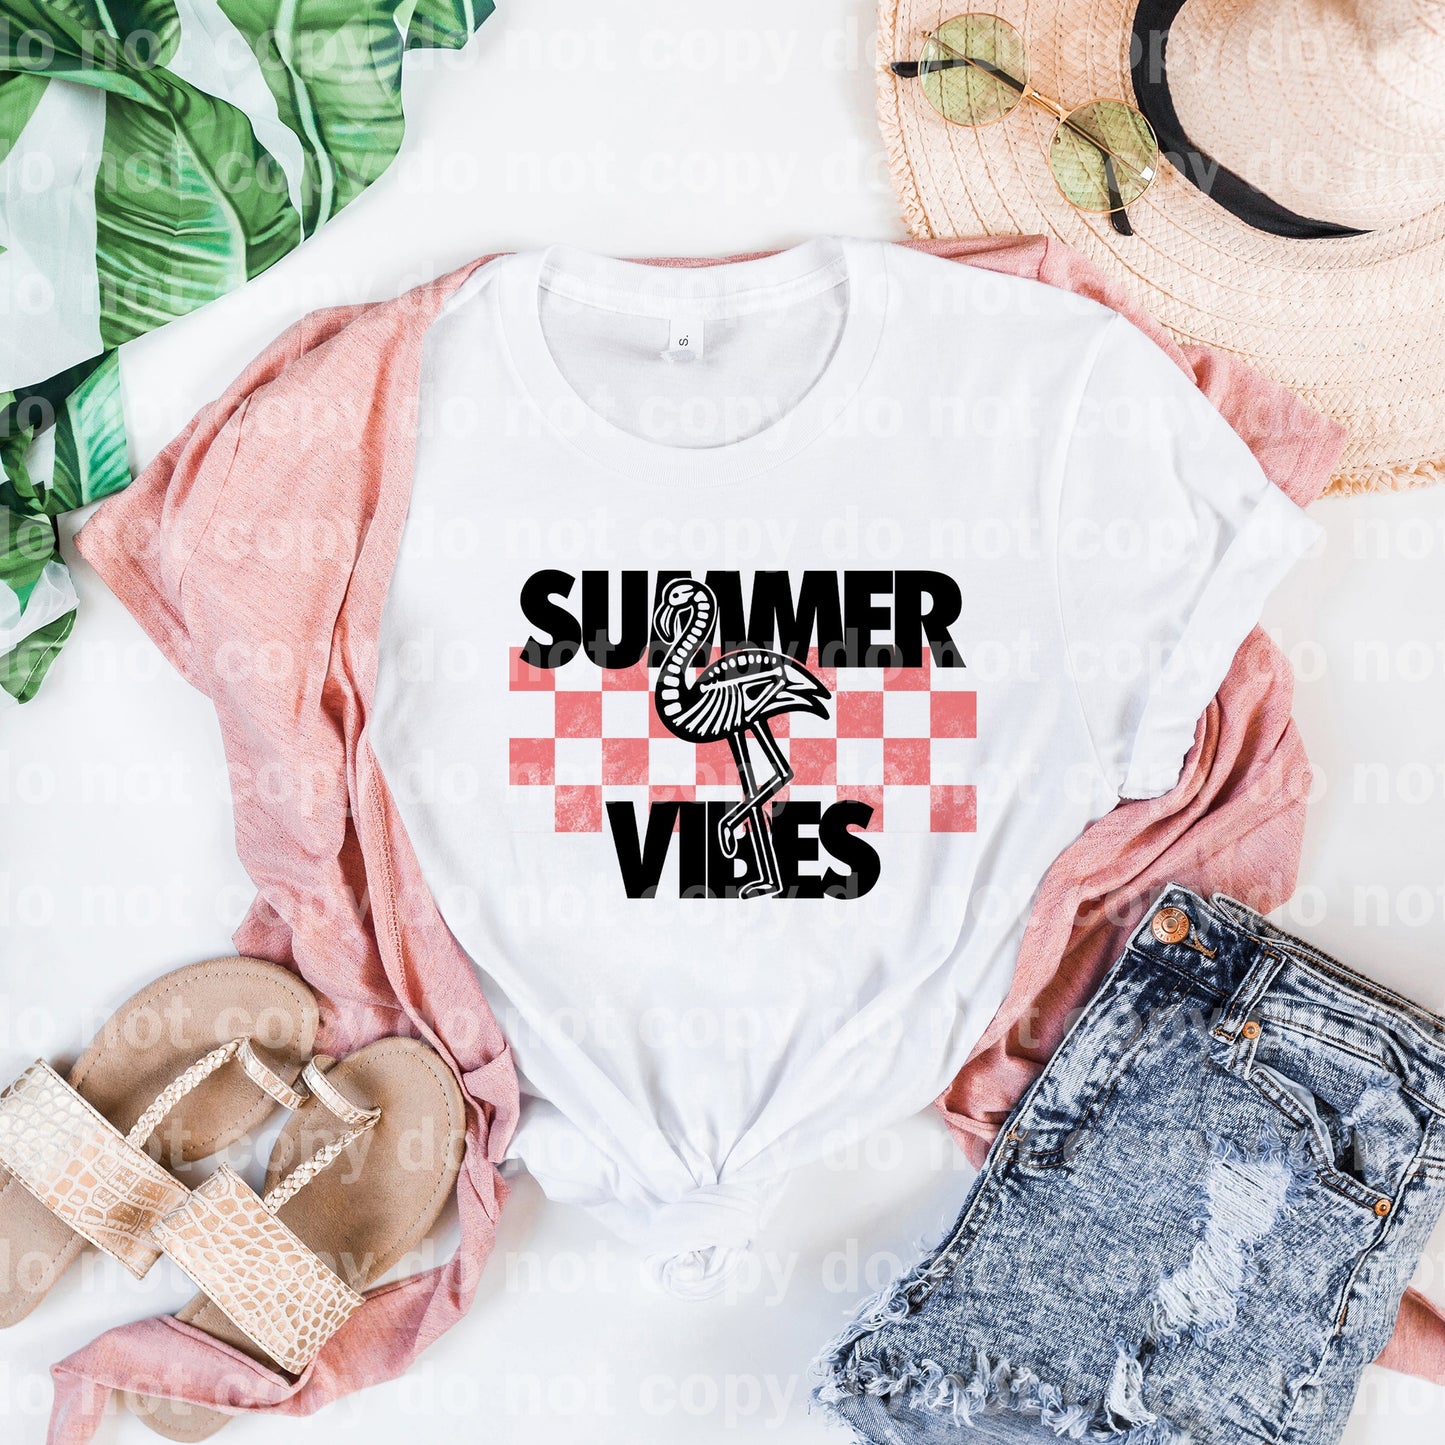 Summer Vibes Black/White Dream Print or Sublimation Print